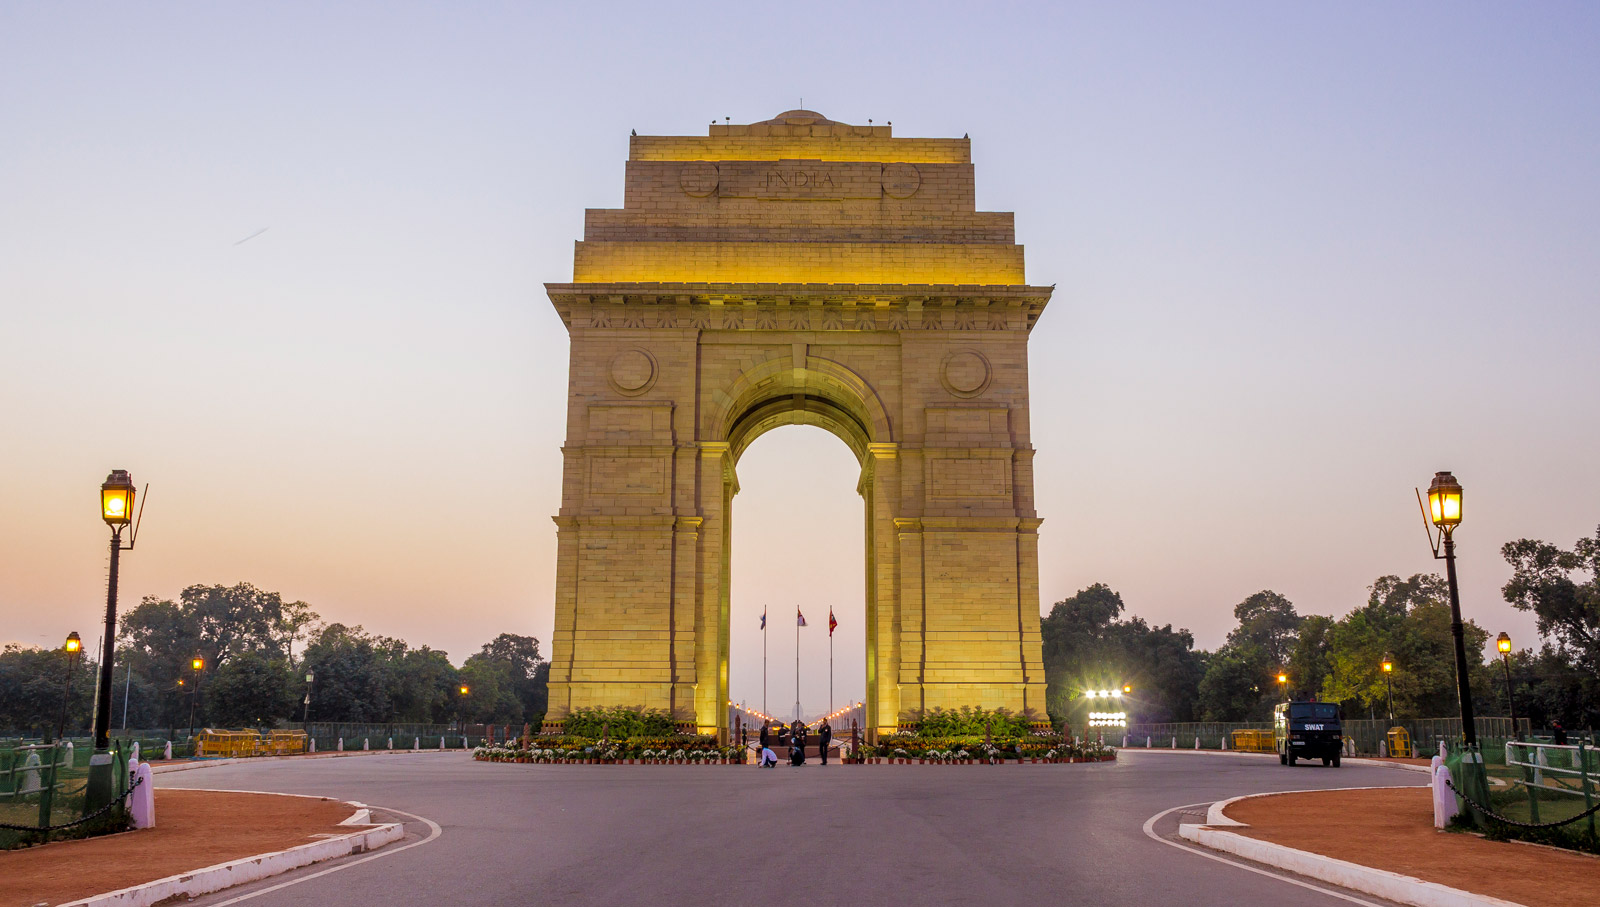 Photoshoot Locations in Delhi